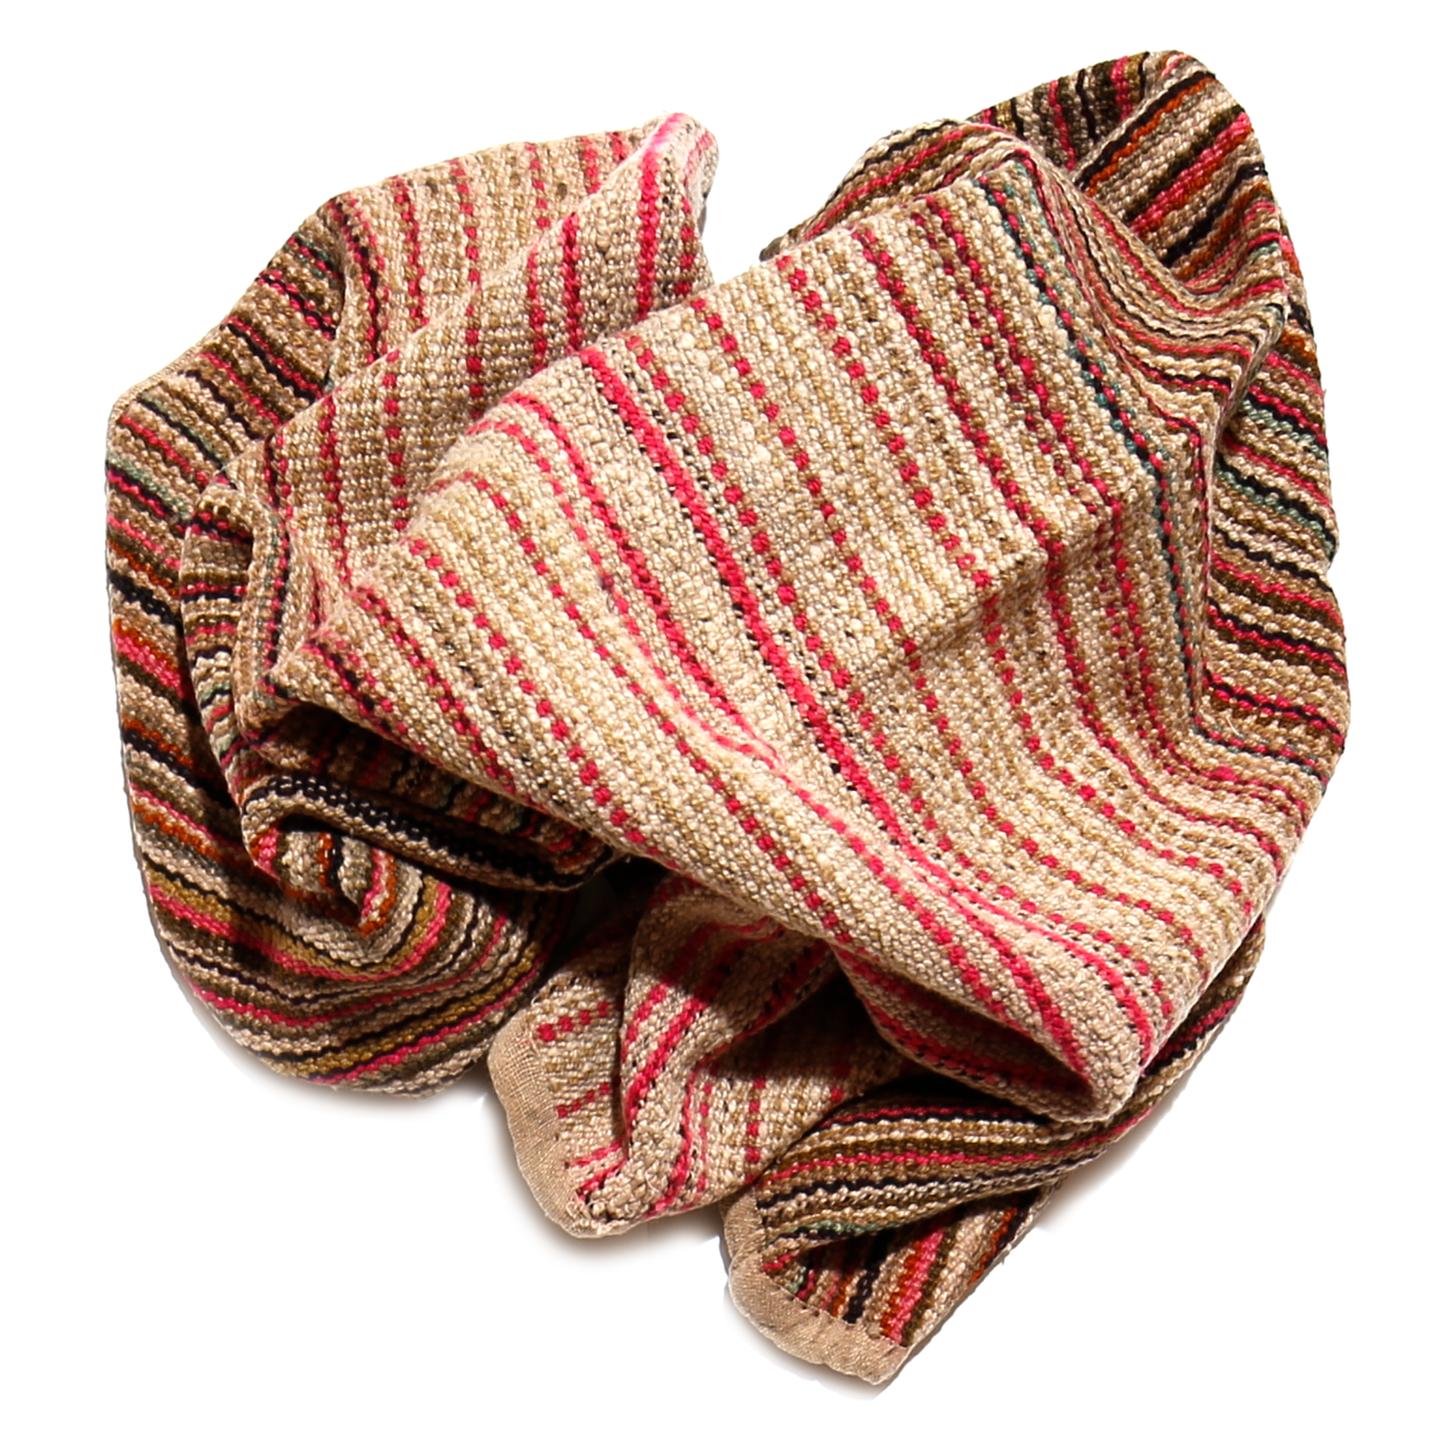 intiearth-vintage-peruvian-handspun-wool-frazada-blanket-handwoven